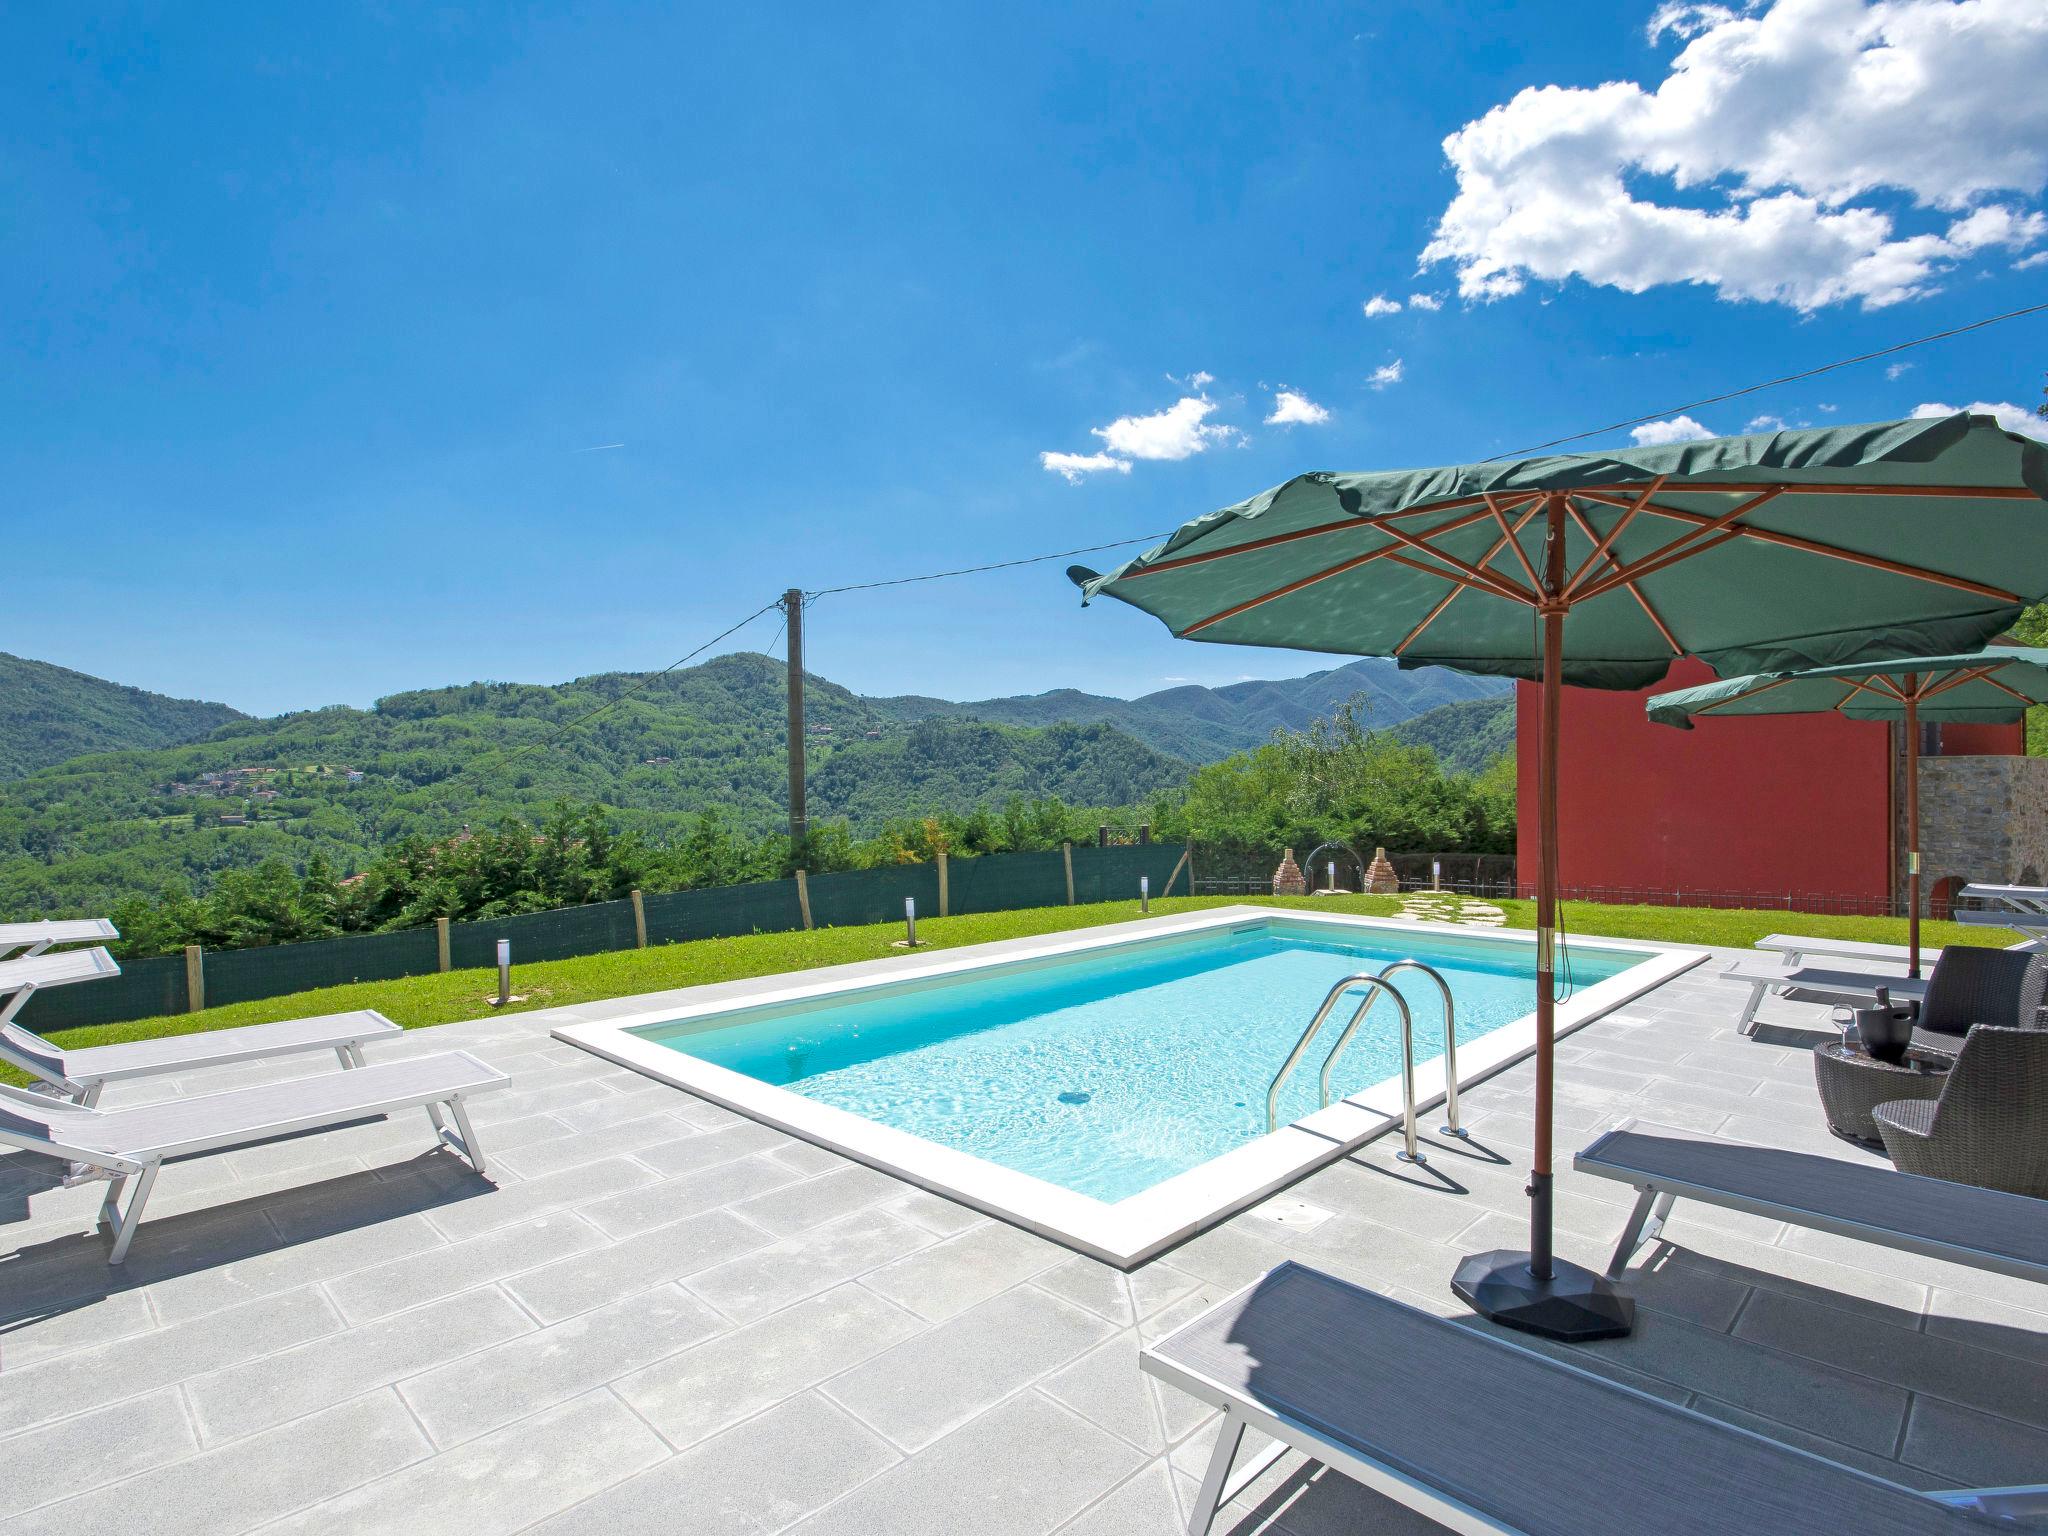 Photo 1 - Maison en Tresana avec piscine et jardin